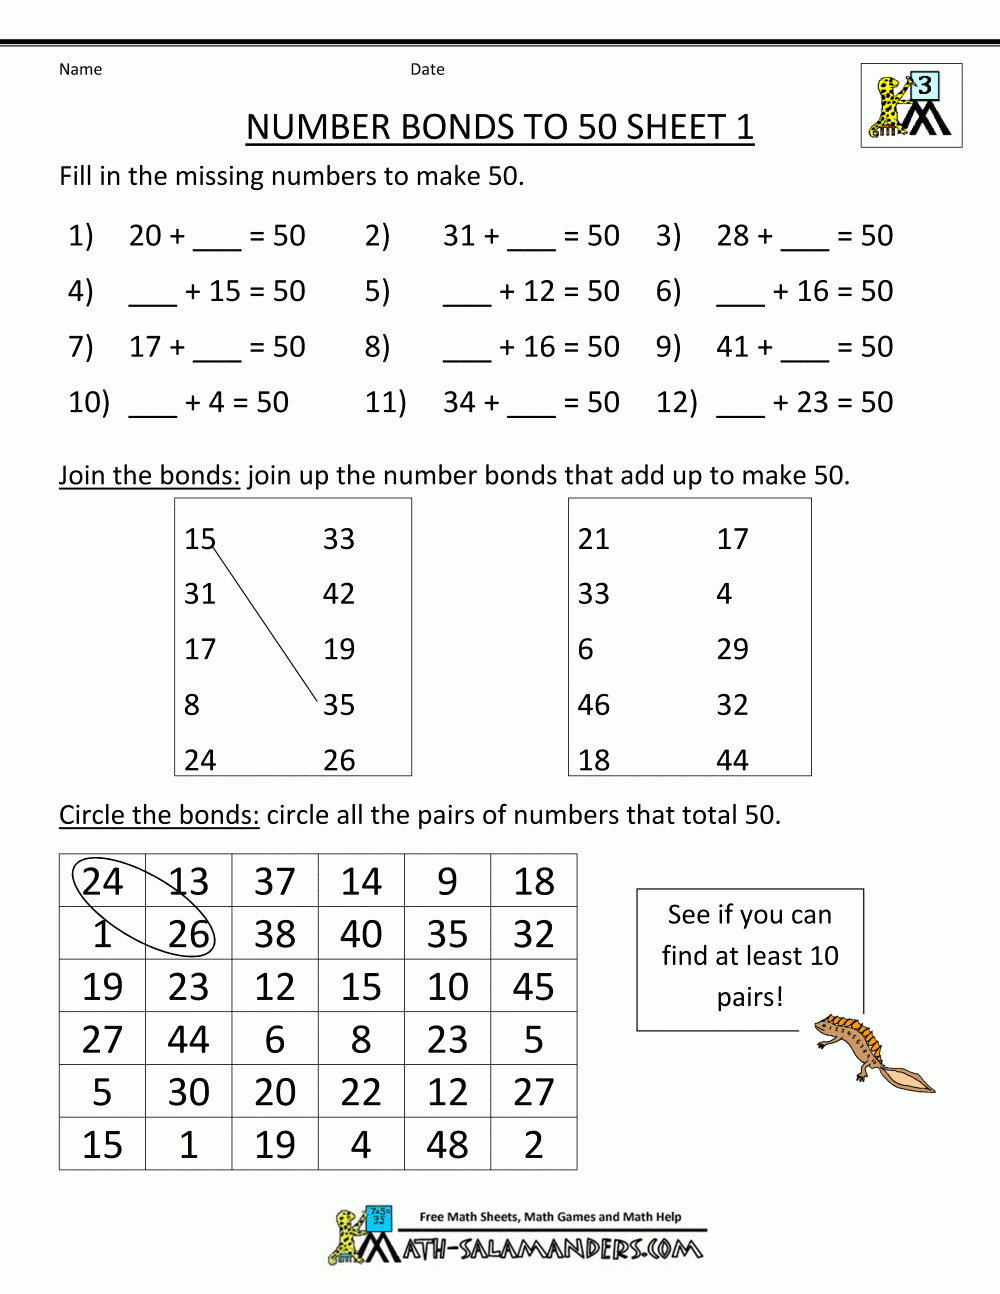 Free Math Worksheets Number Bonds To 50 1 | New | Pinterest | Number - Free Printable Number Bond Template